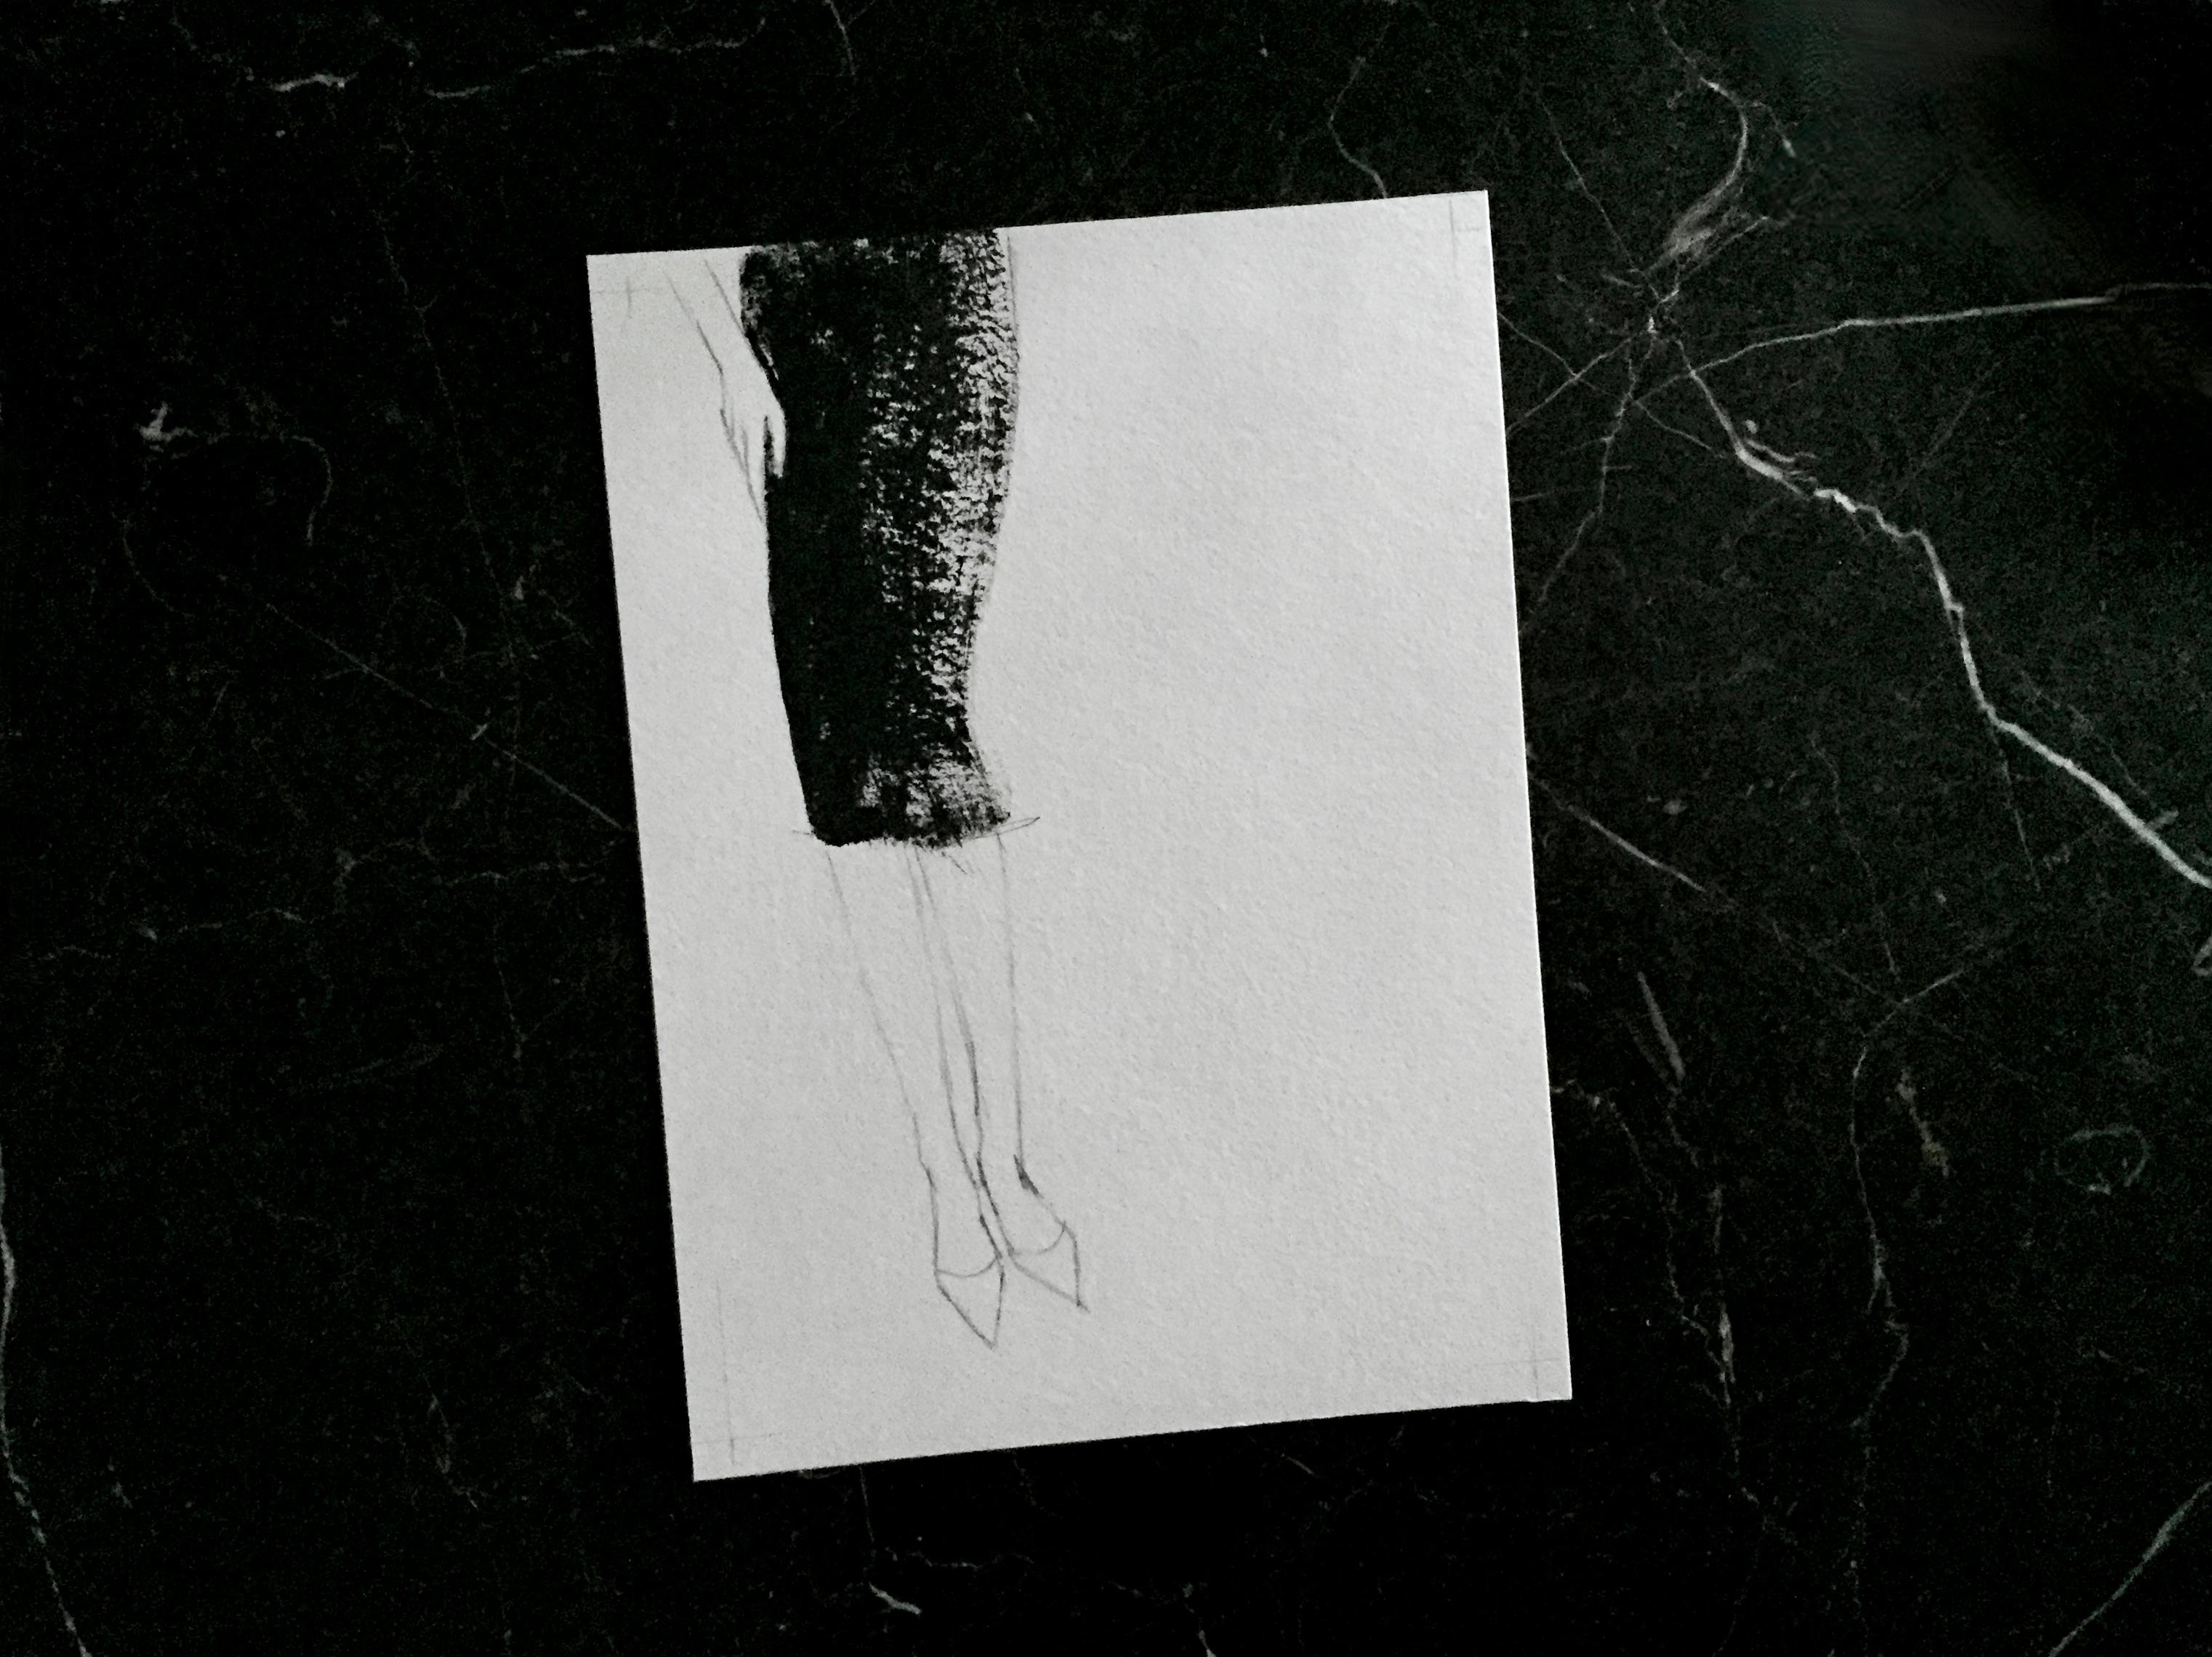 Andrea Stajan-Ferkul Figurative Art - Pencil Skirt - 5" x 7", Black & White Original Artwork On Paper